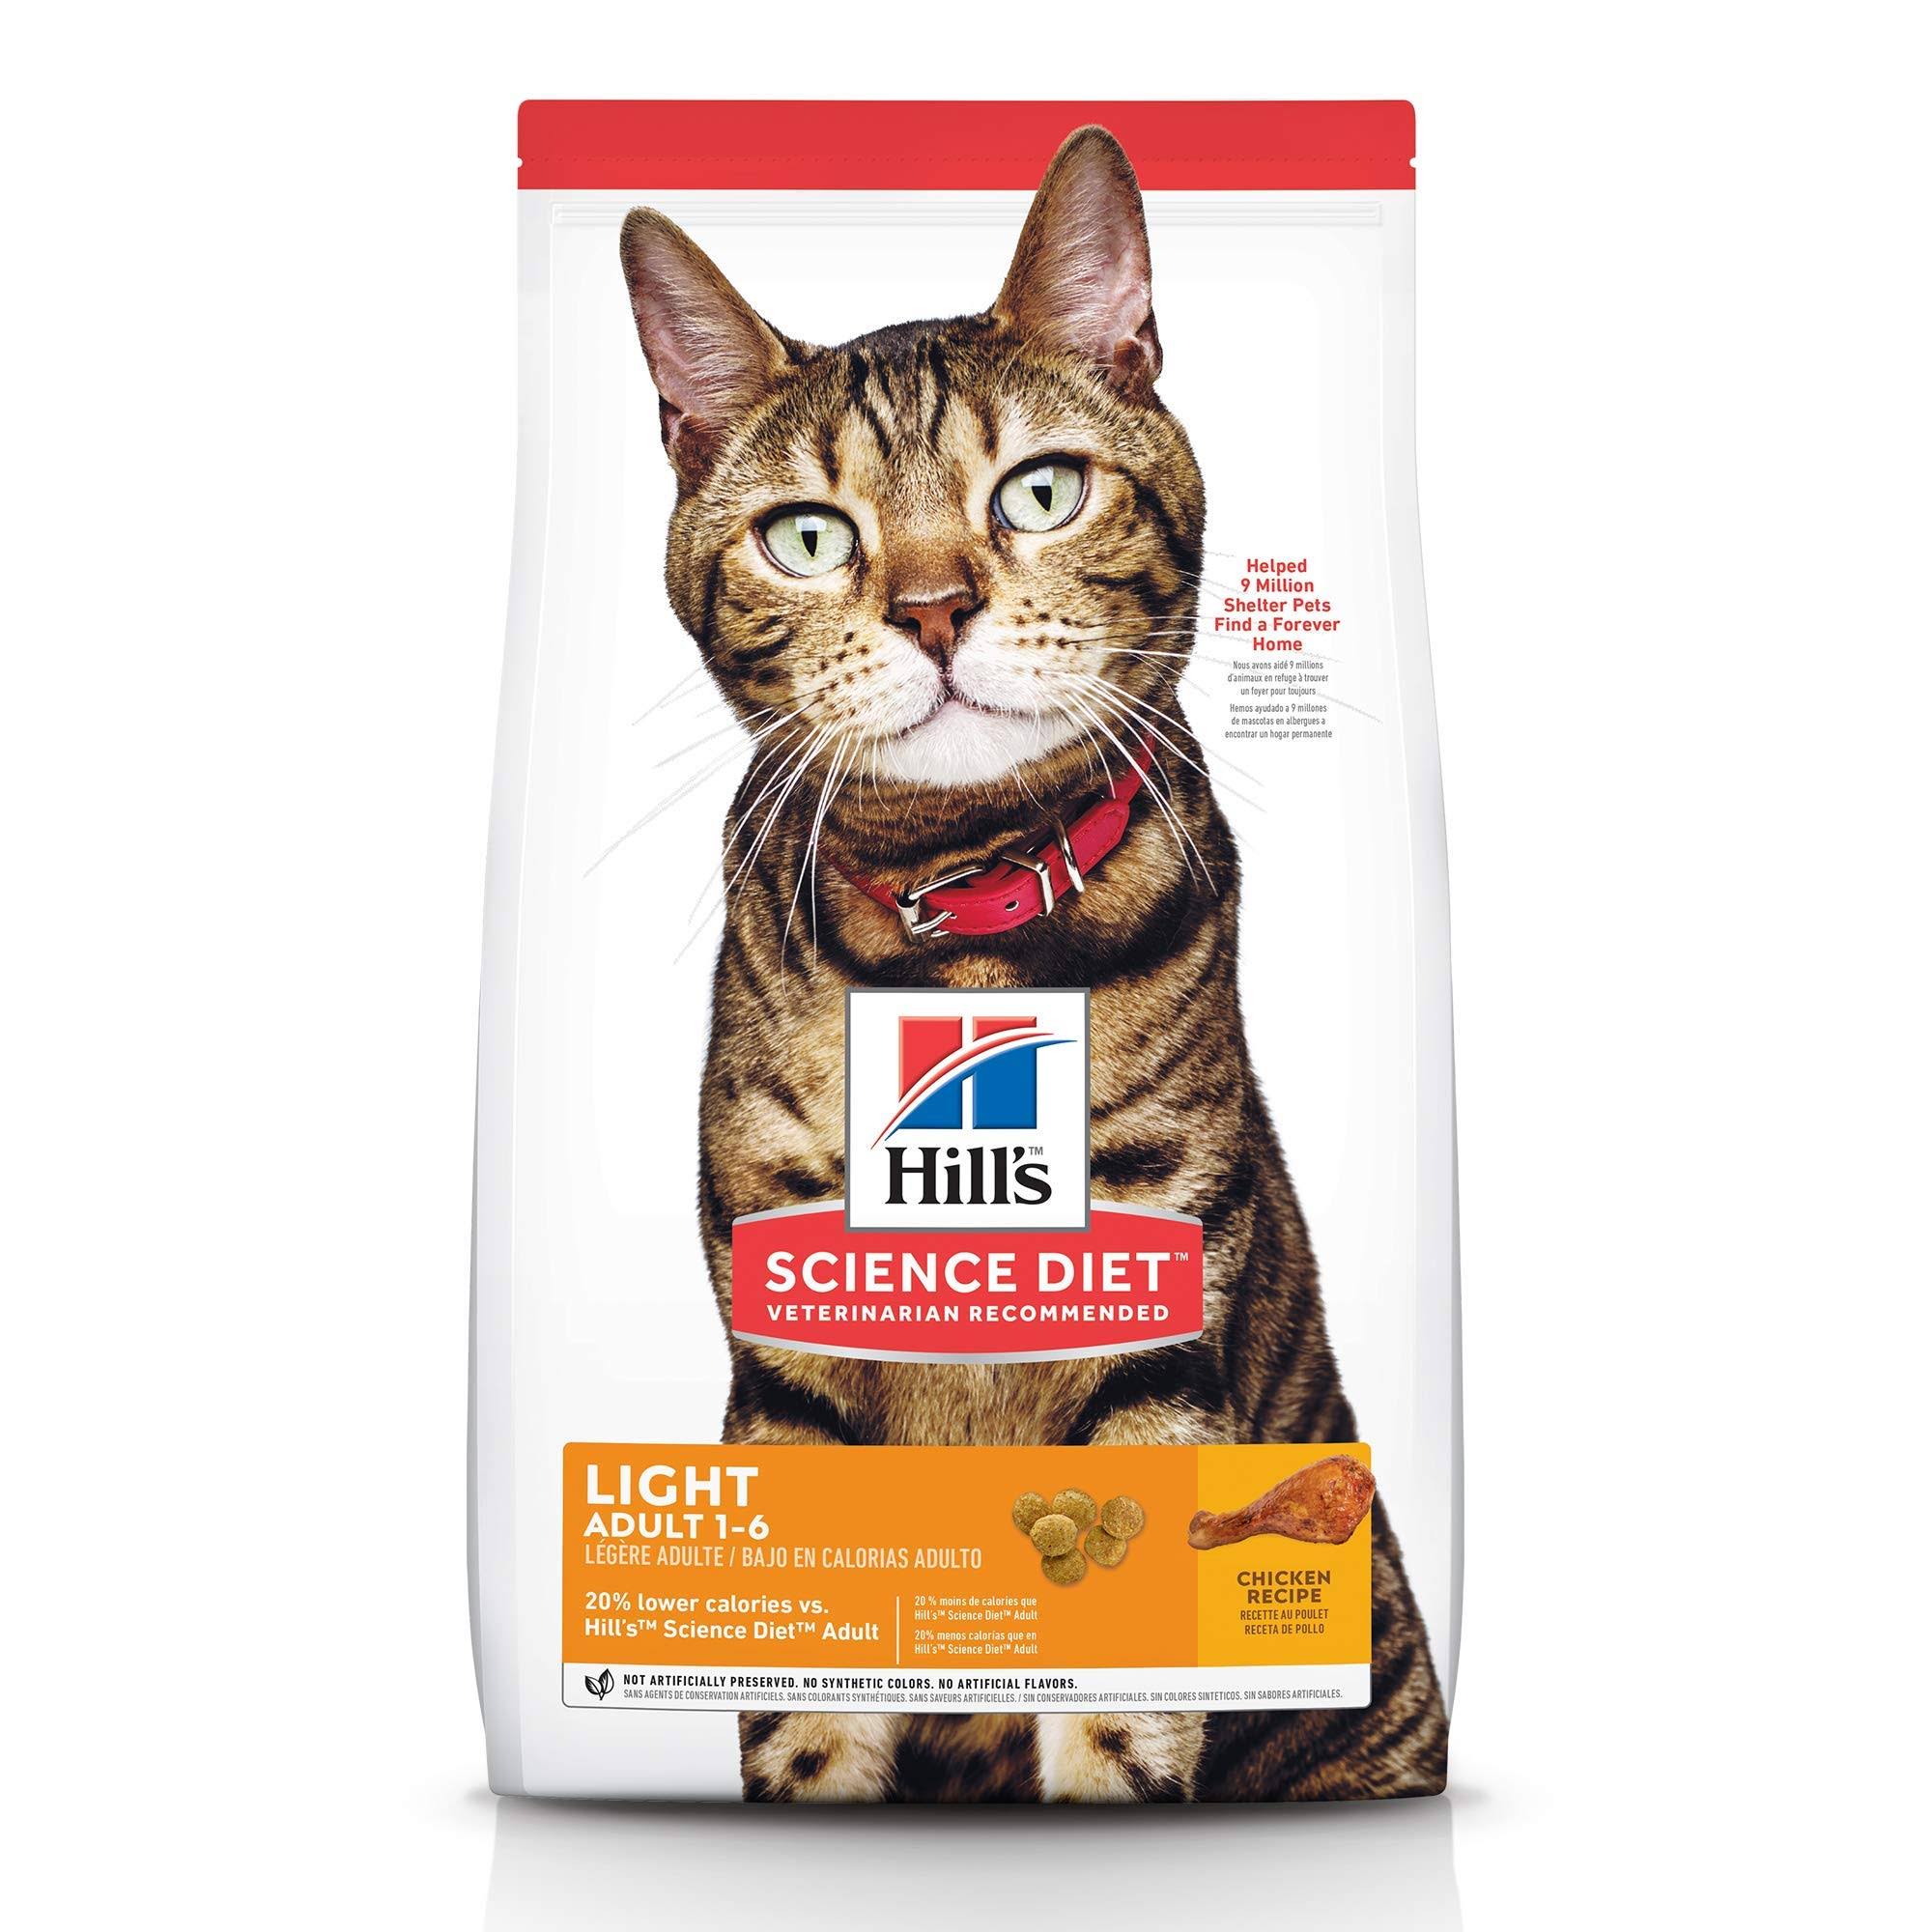 Hill's Science Diet Light Premium Natural Cat Food - Chicken Recipe, 4lb